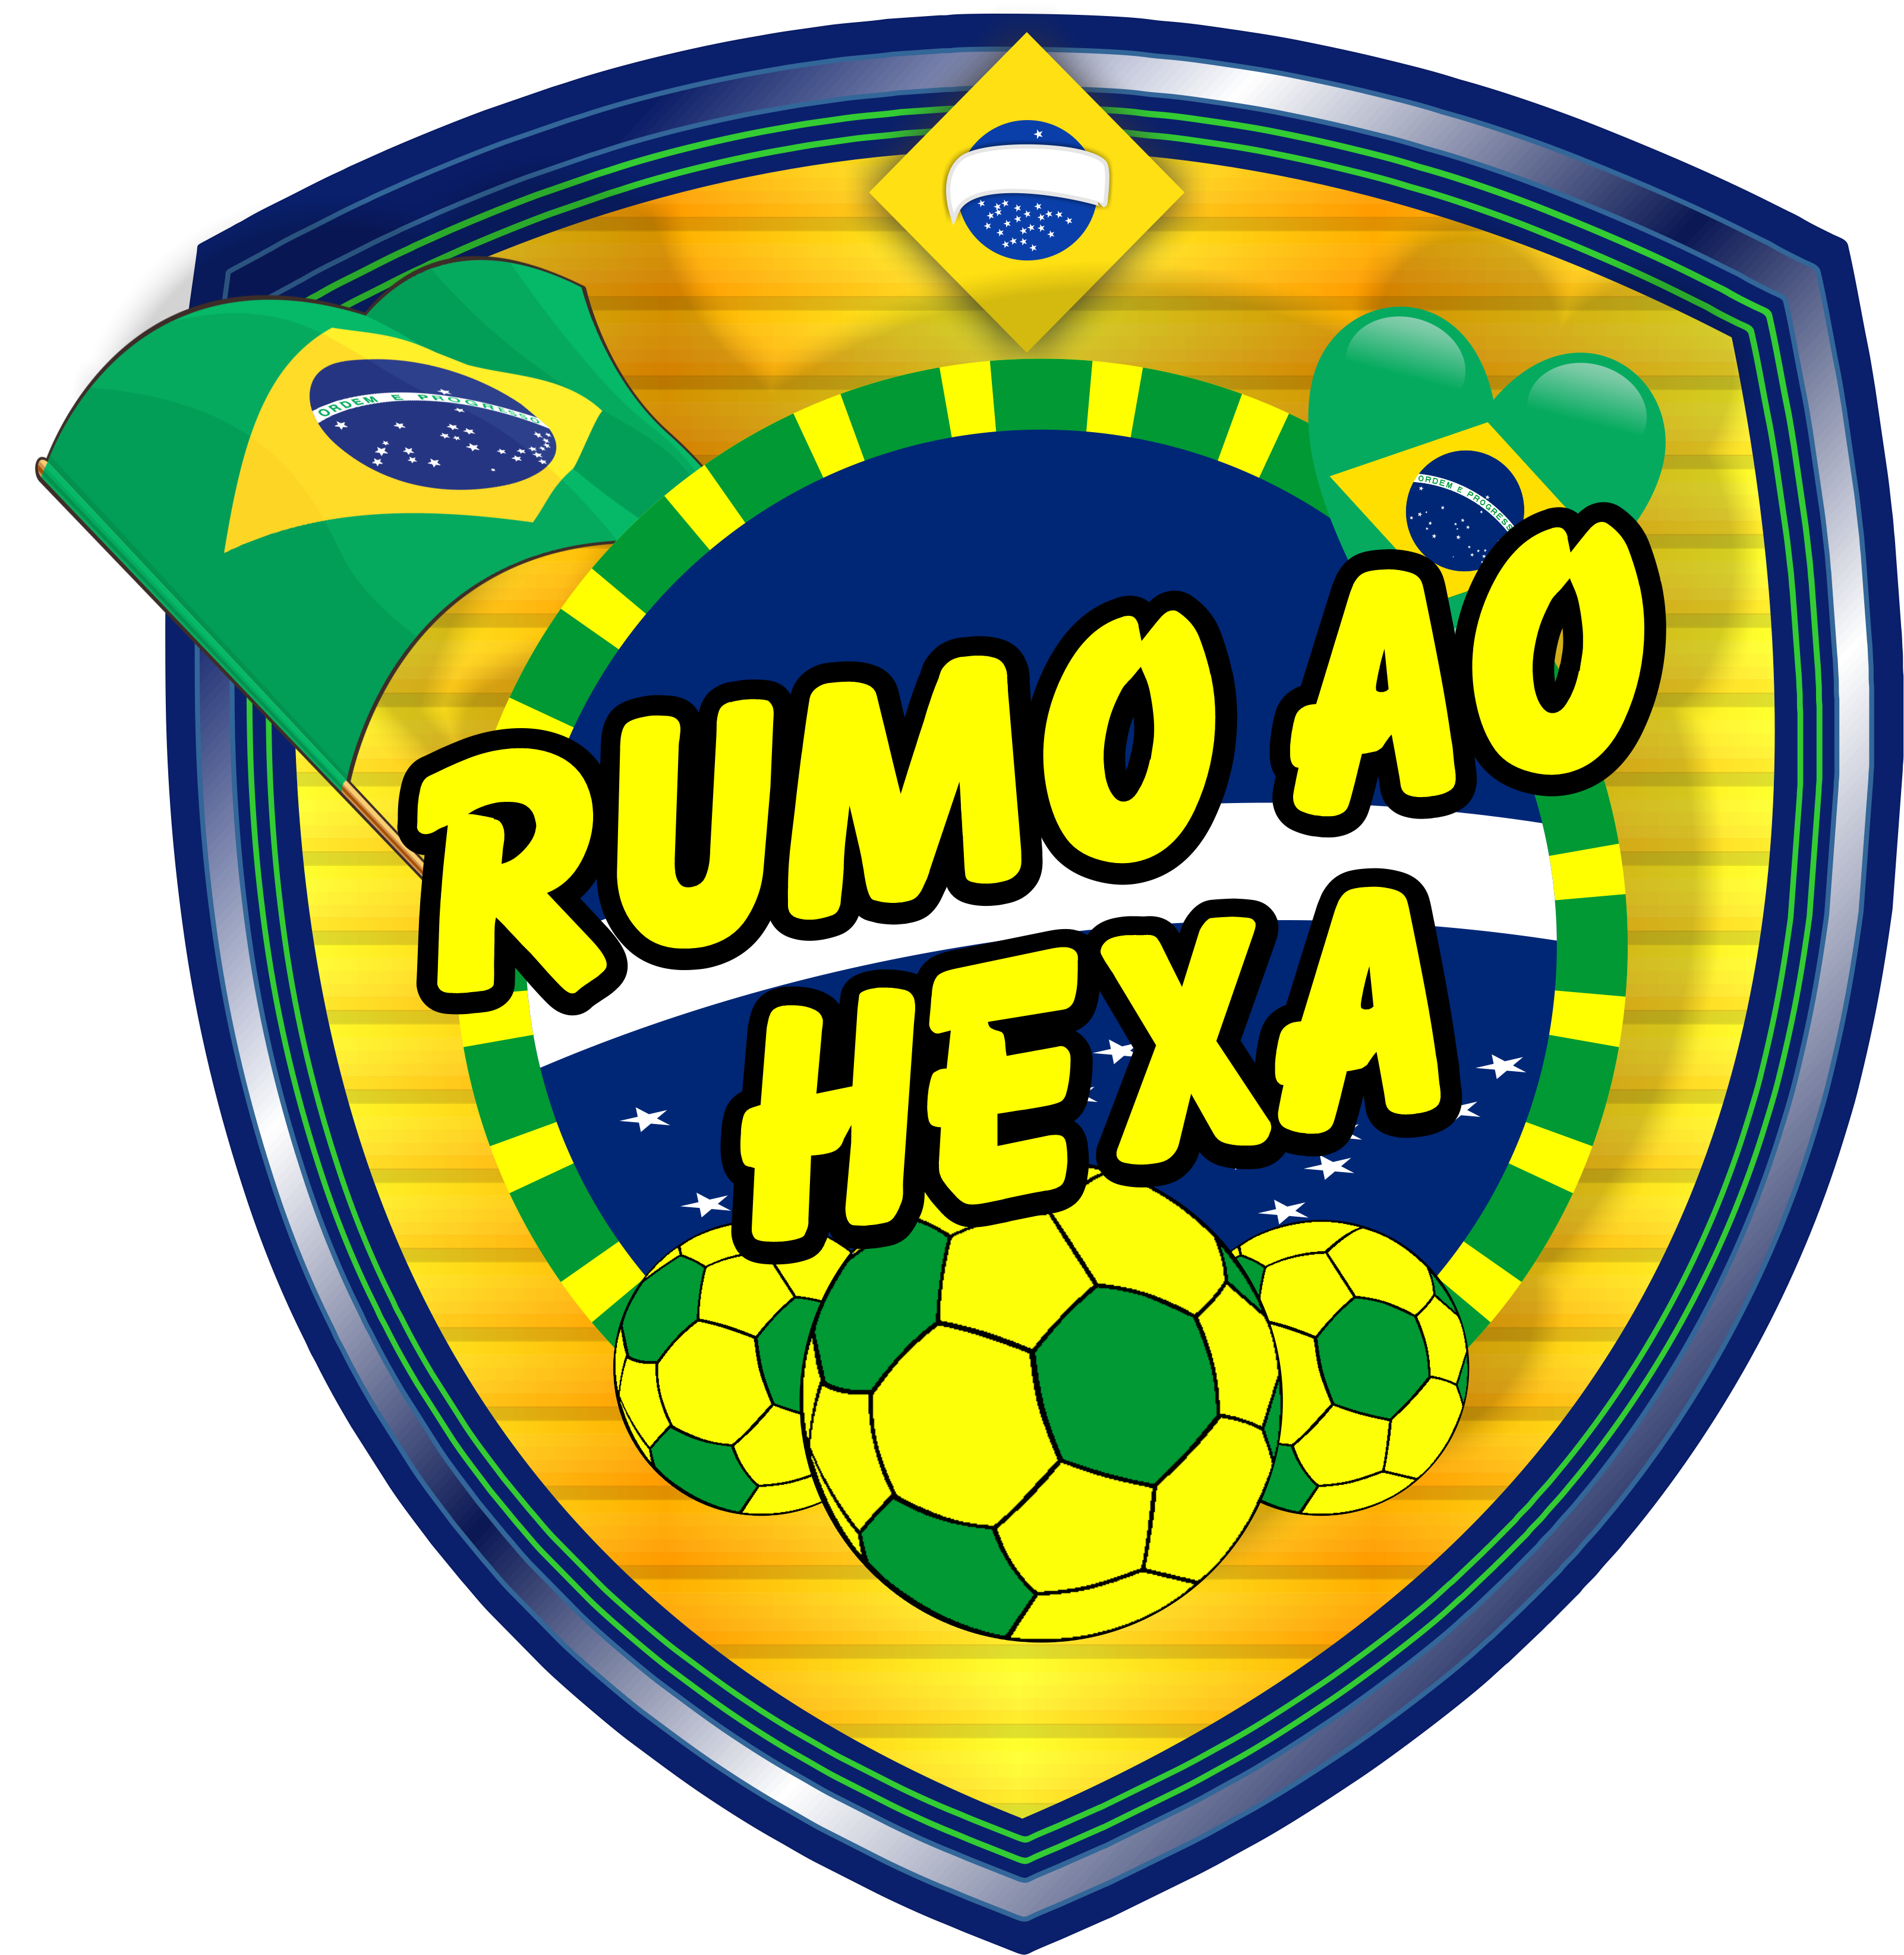 Copa do mundo 2022 brasão brasil rumo ao hexa logomarca png